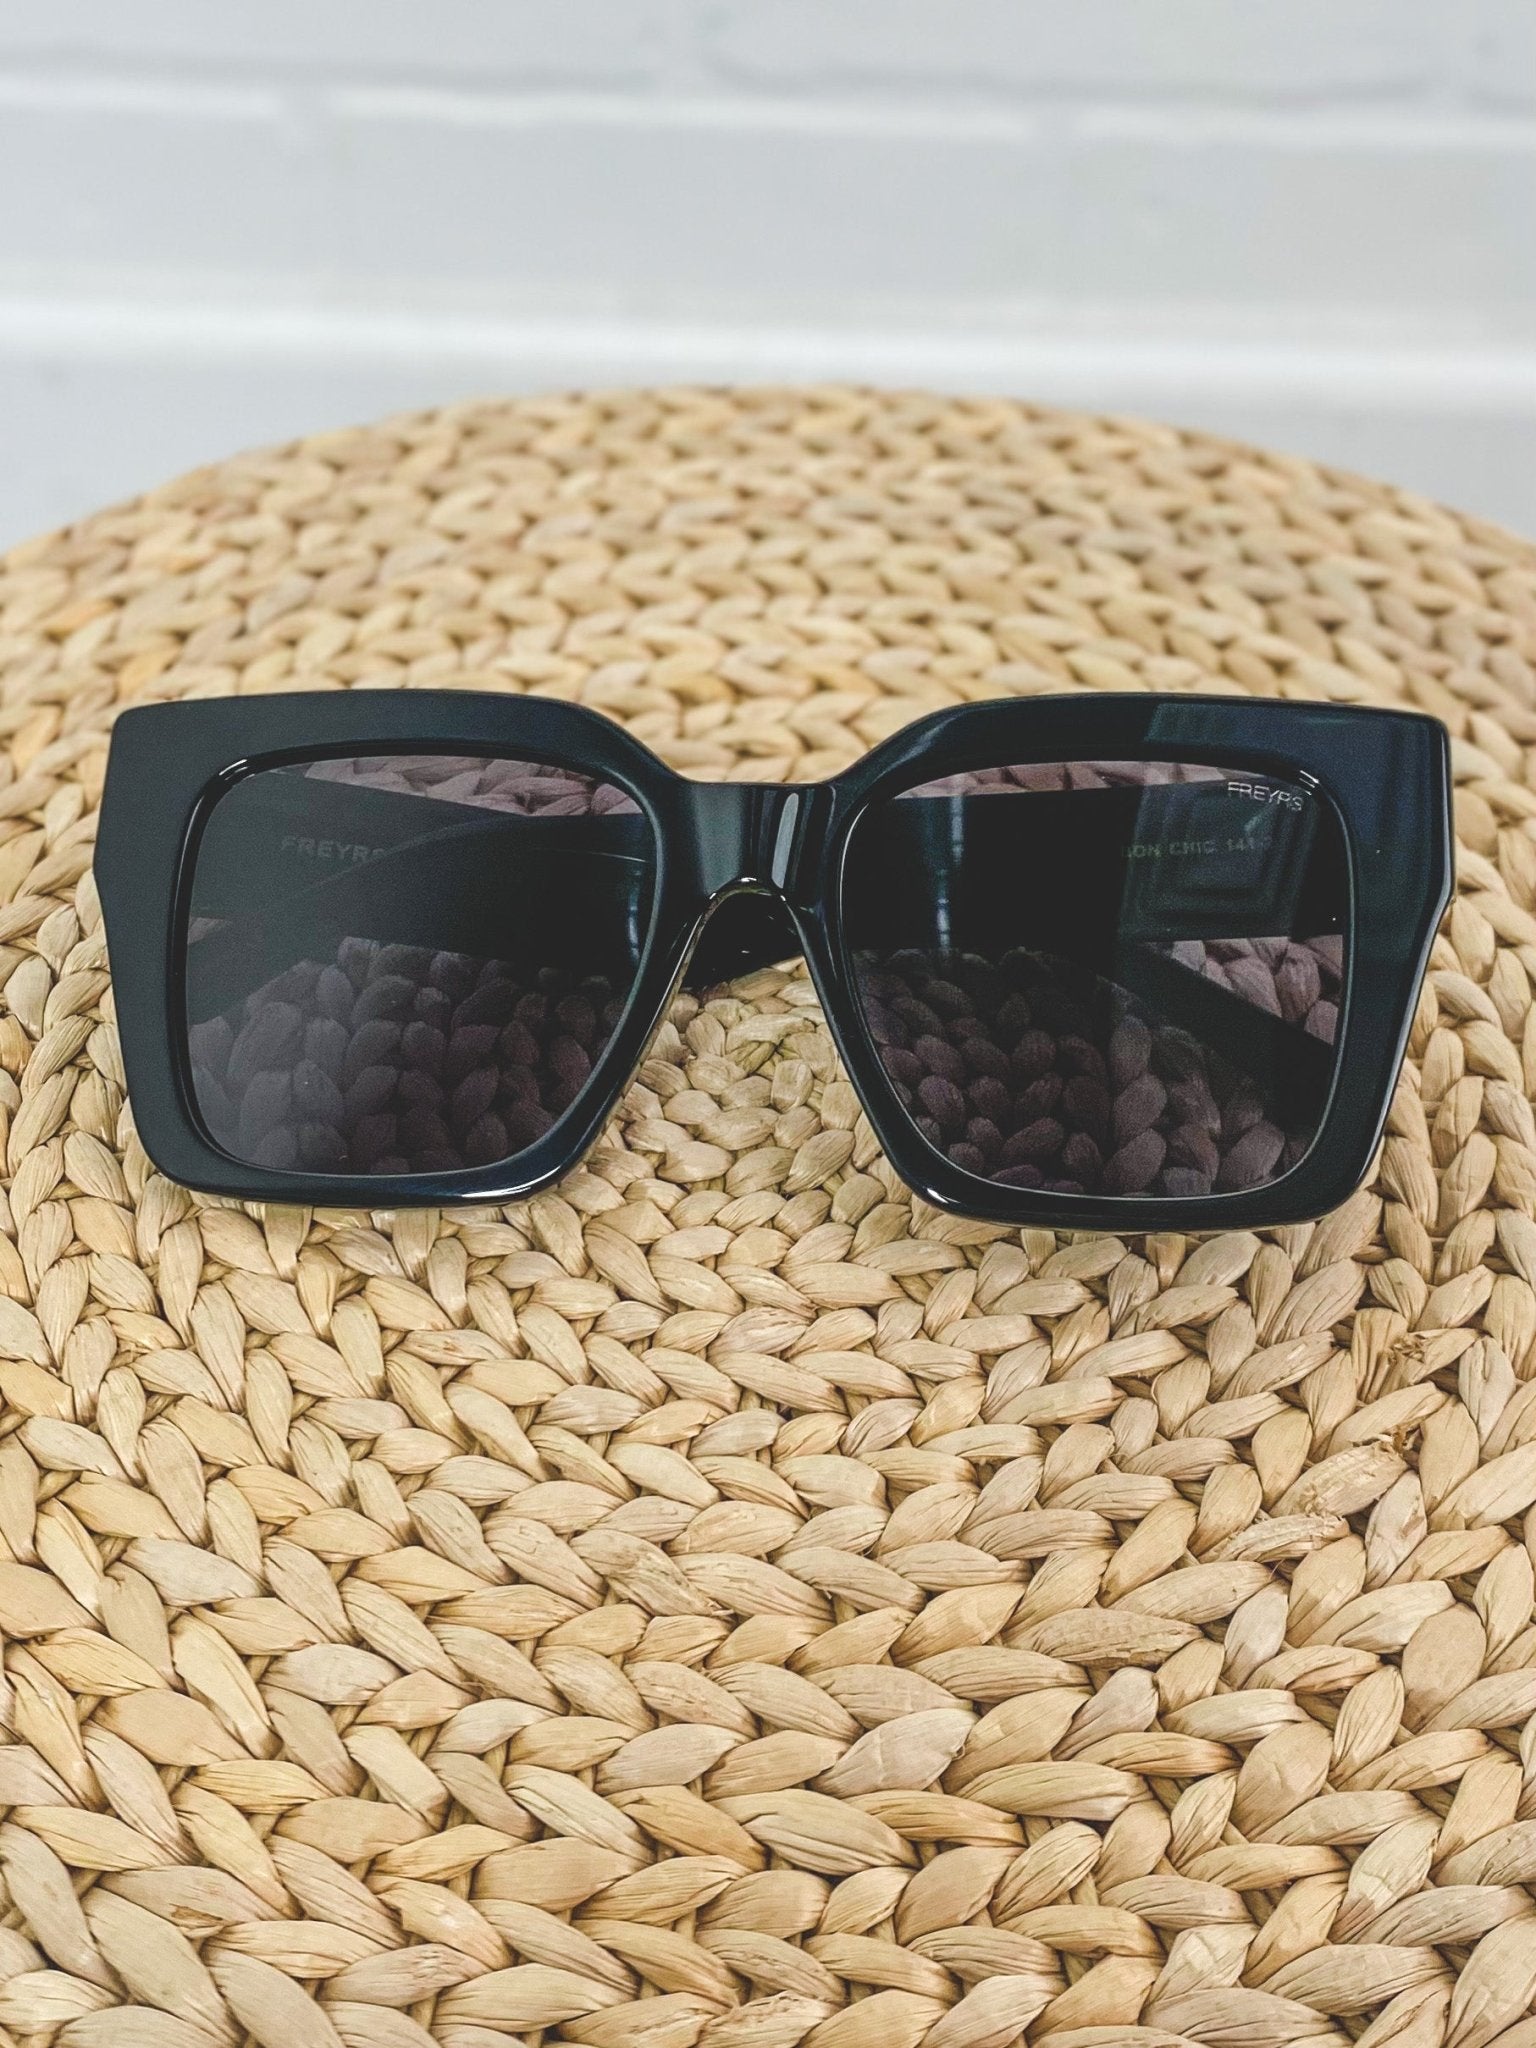 Freyrs Bon Chic sunglasses black - Cute Sunglasses - Fun Wayfarers at Lush Fashion Lounge Boutique in Oklahoma